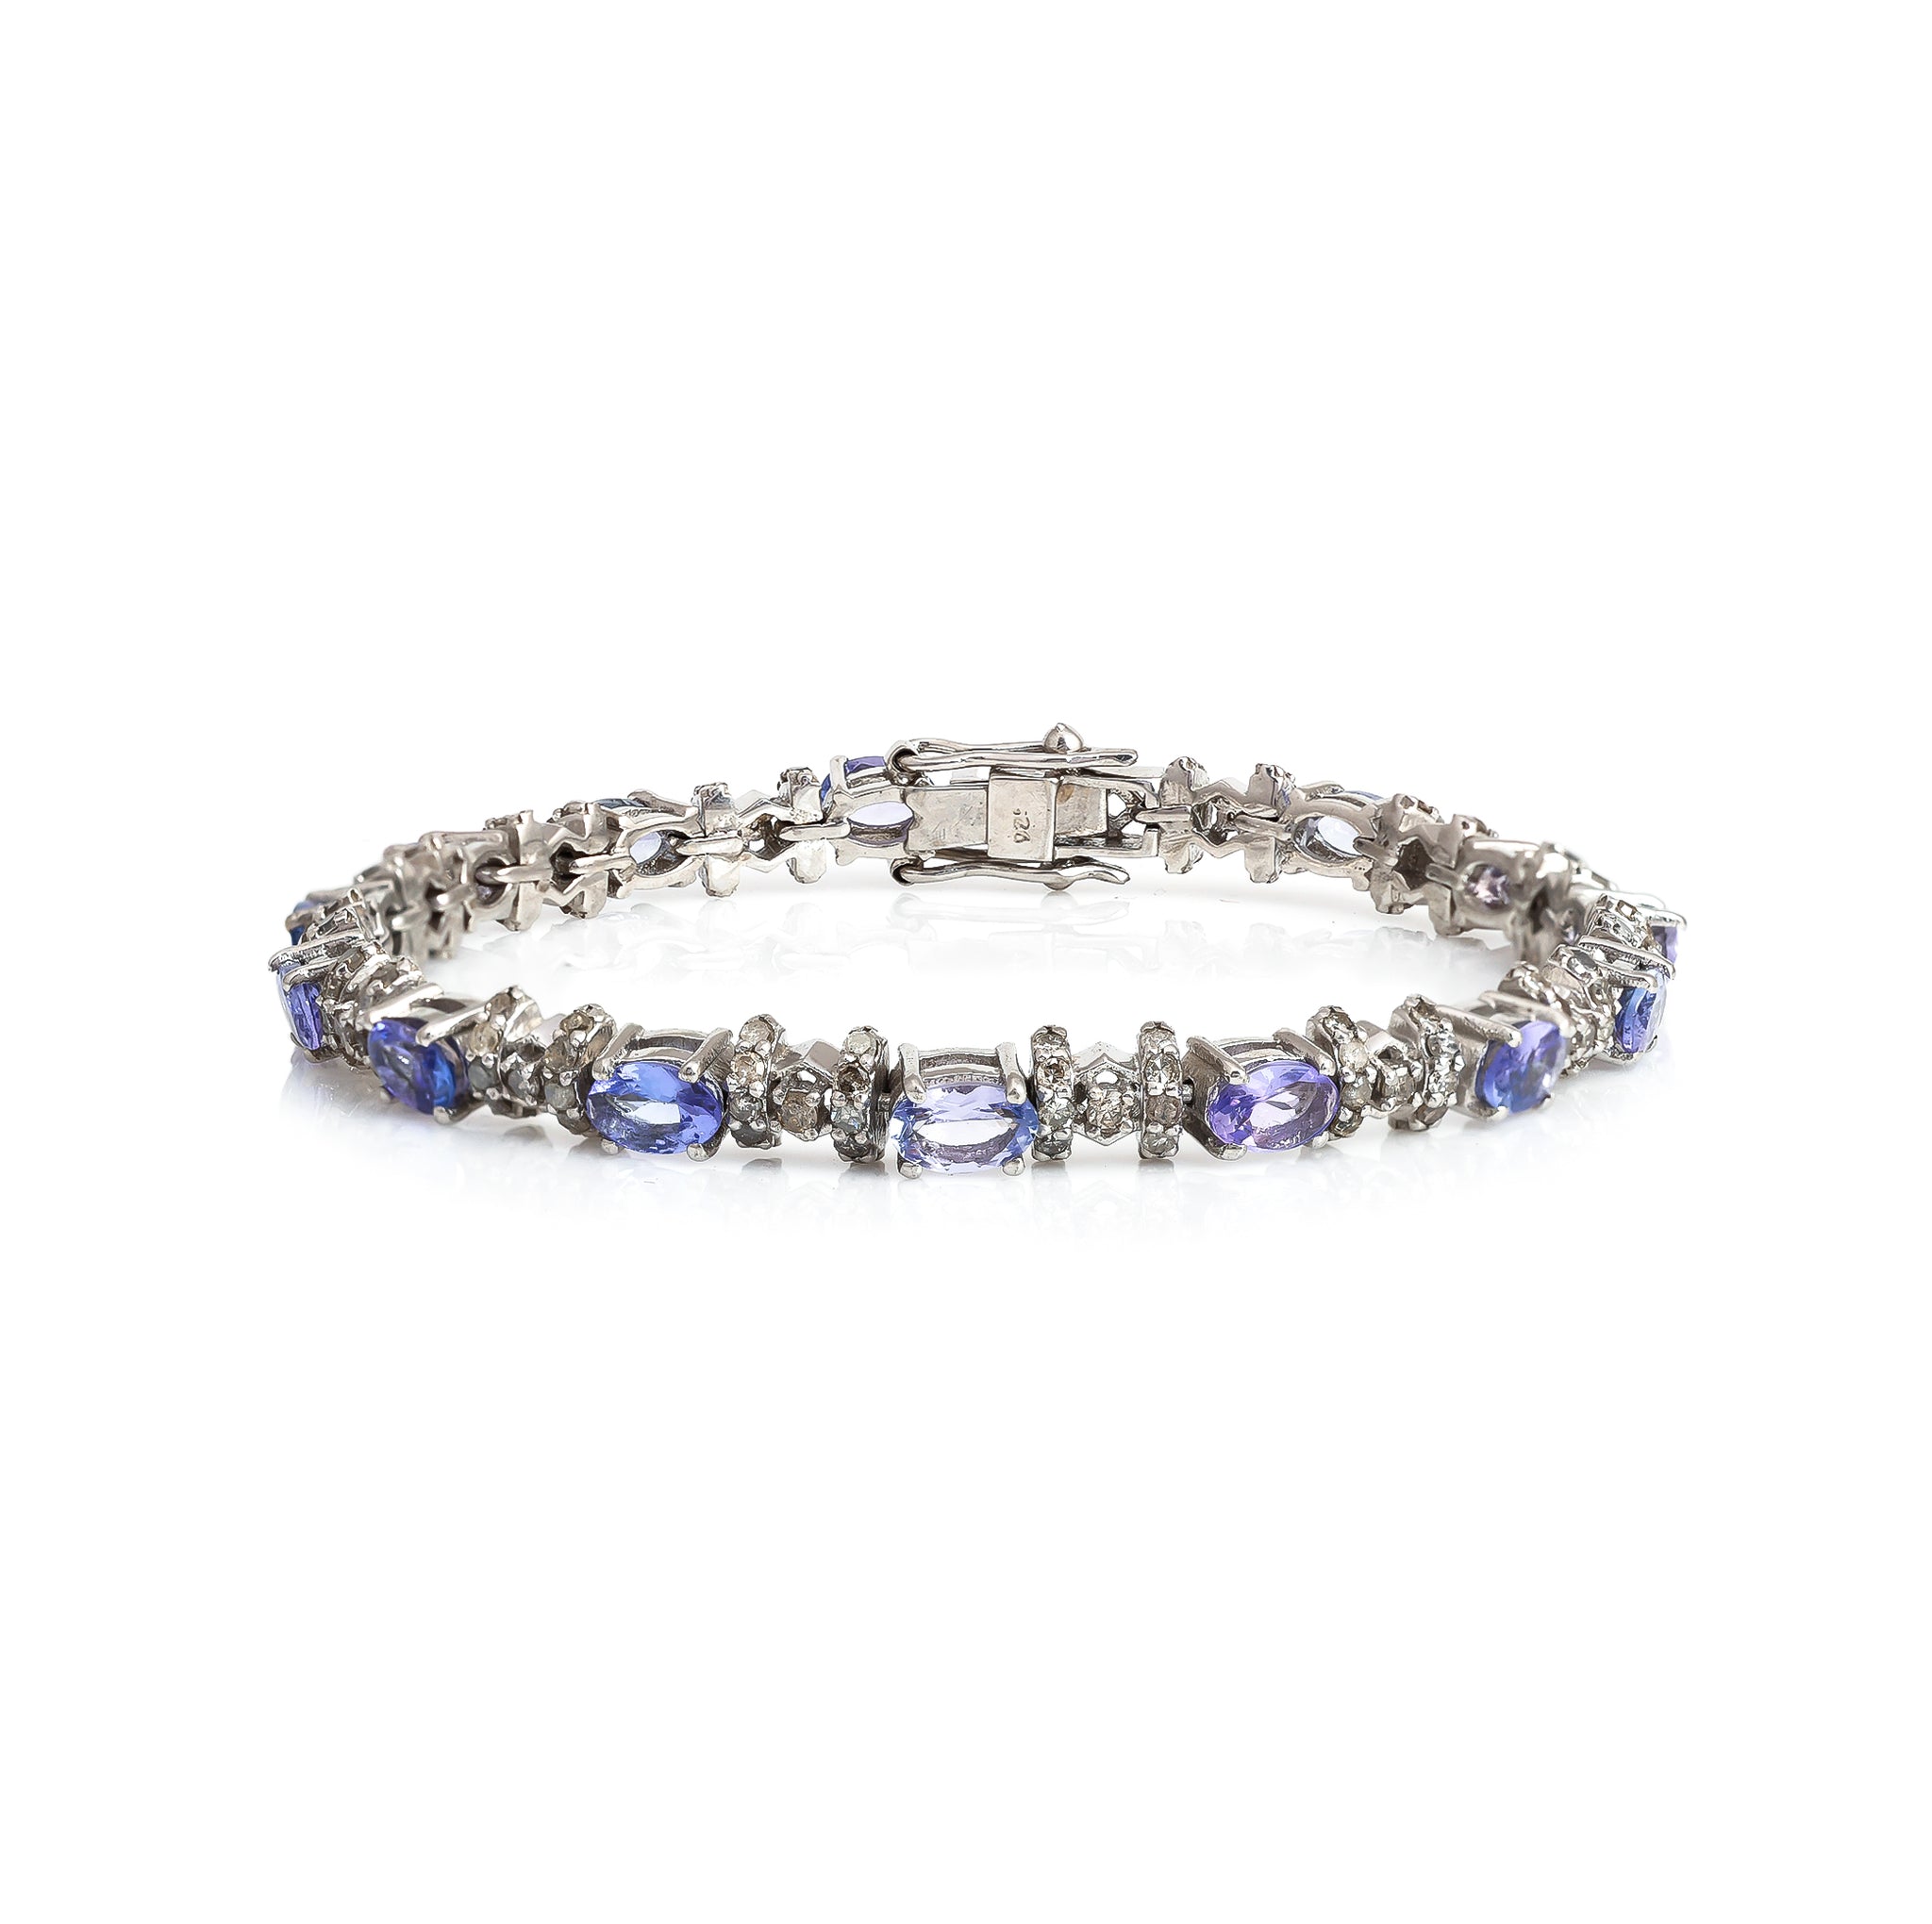 Natural Tanzanite and Diamonds bracelet